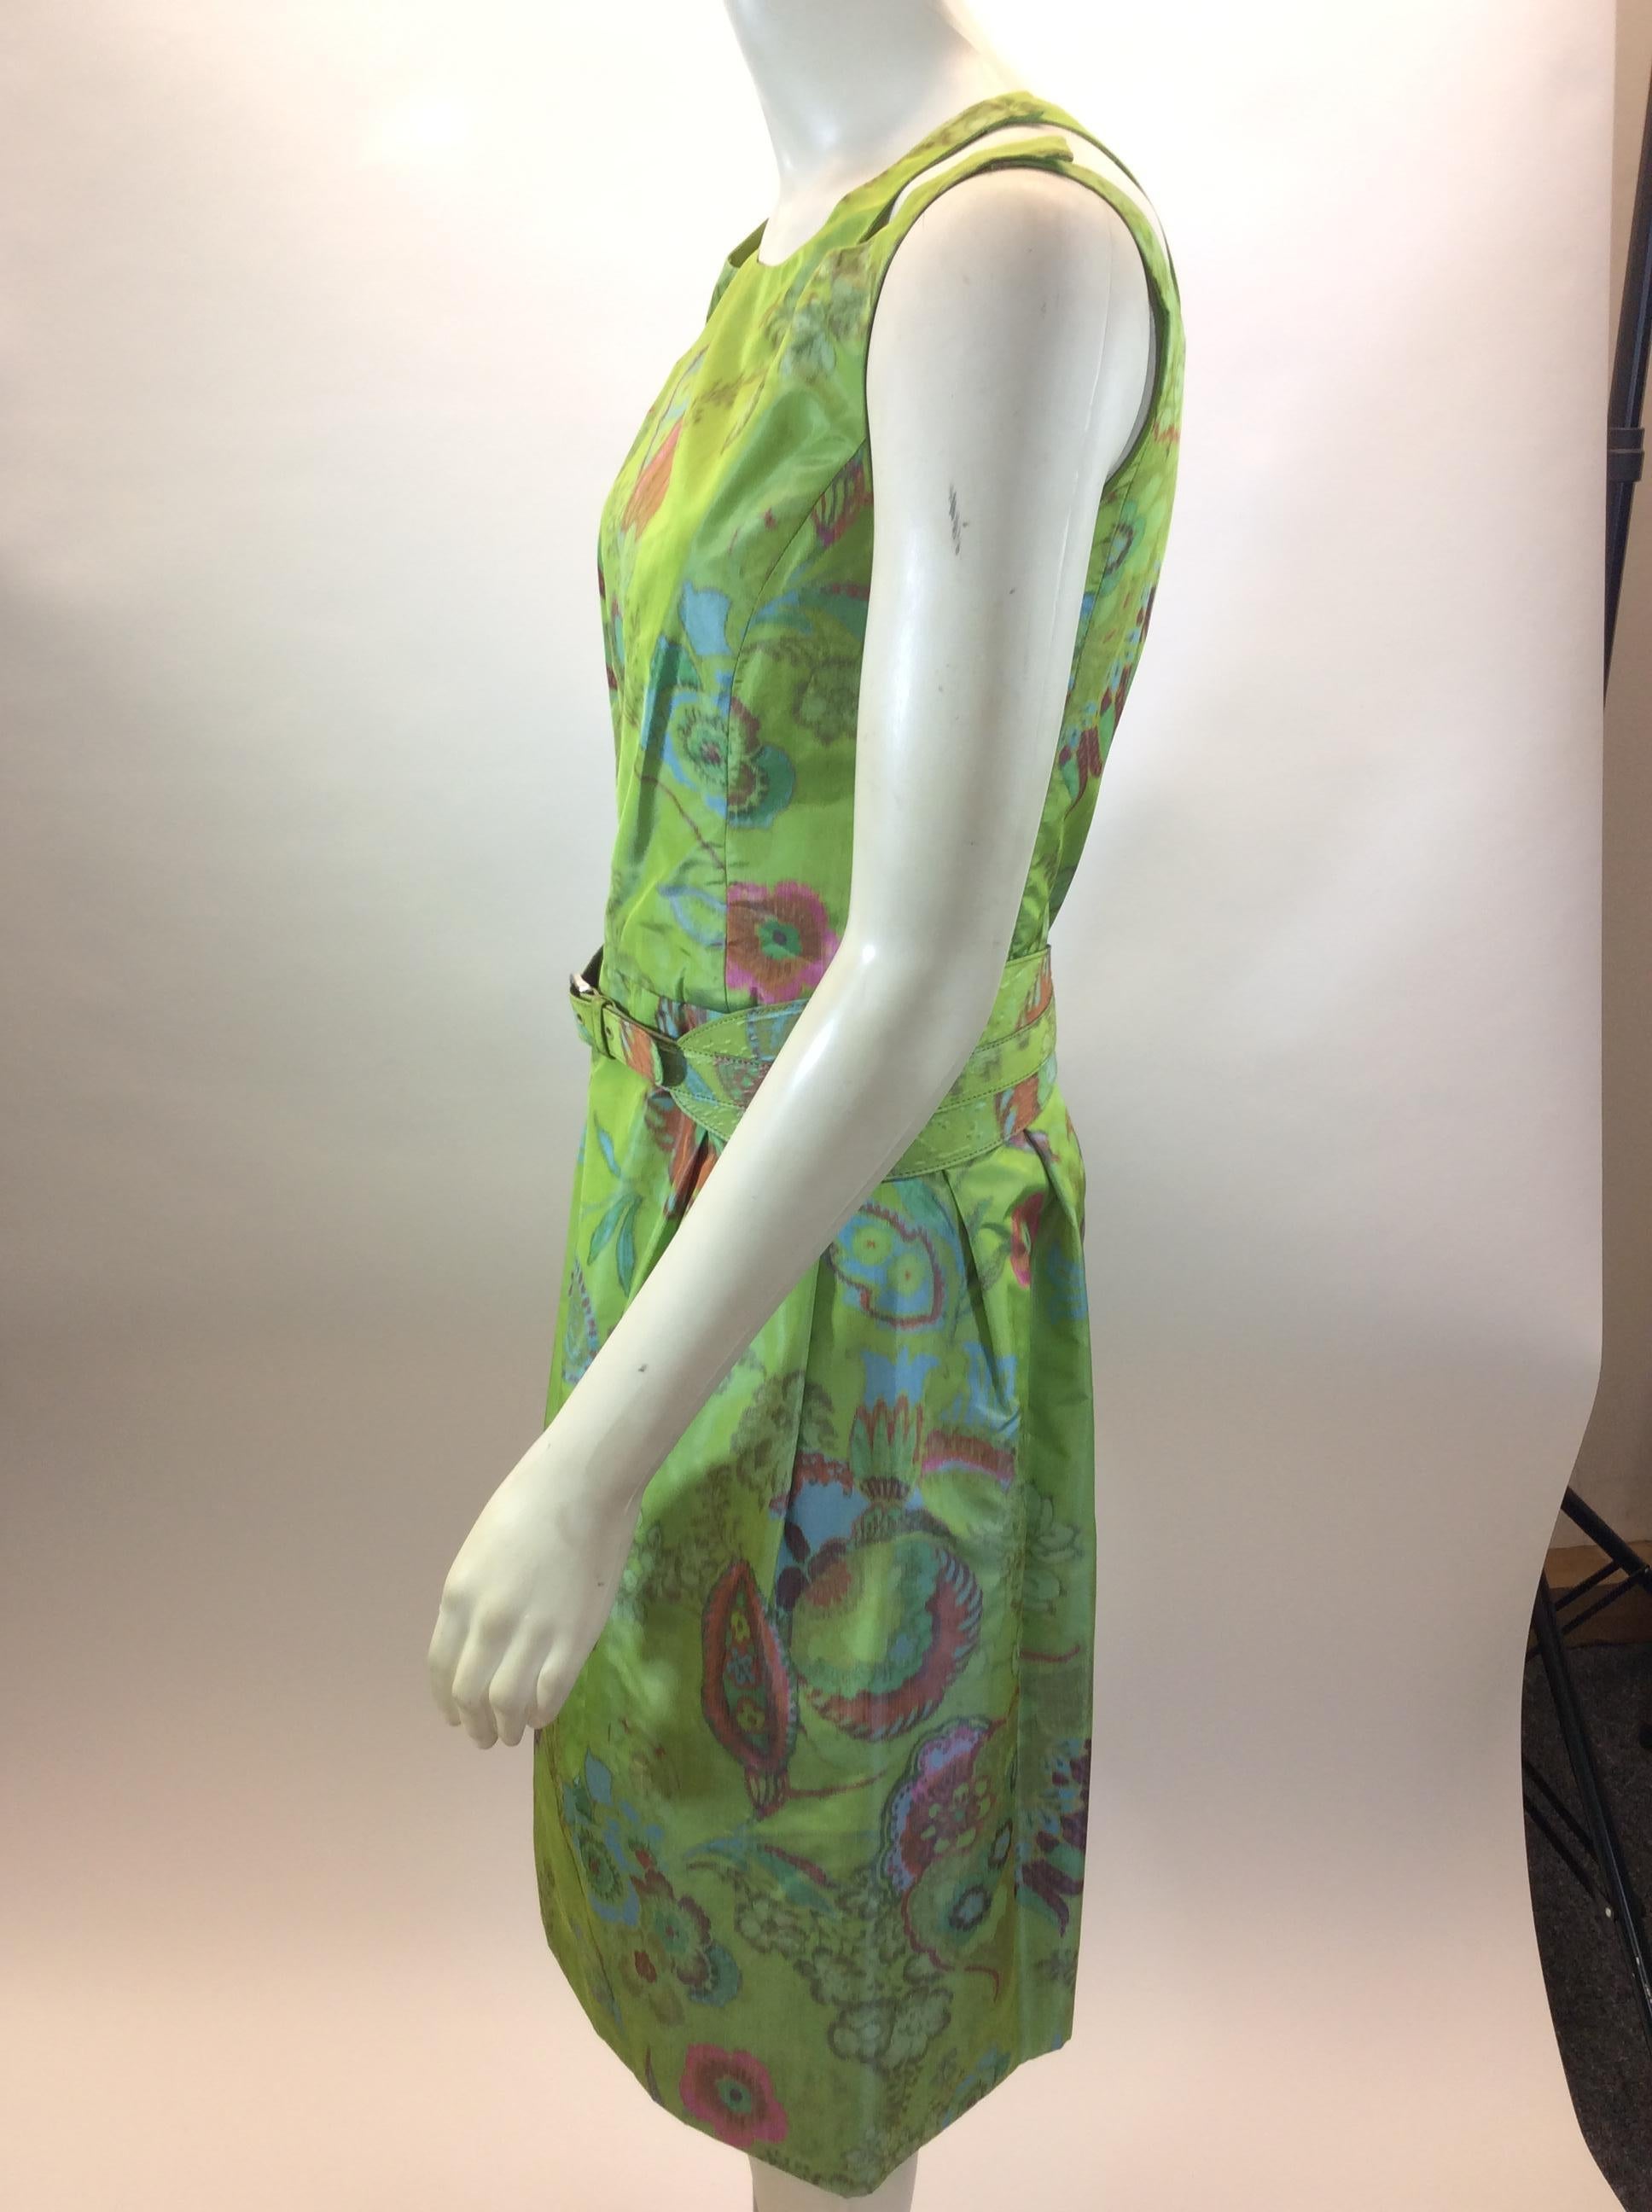 Oscar de la Renta Green Floral Dress
$499
Made in the US
68% Polyester, 32% Silk
Size 6
Length 40